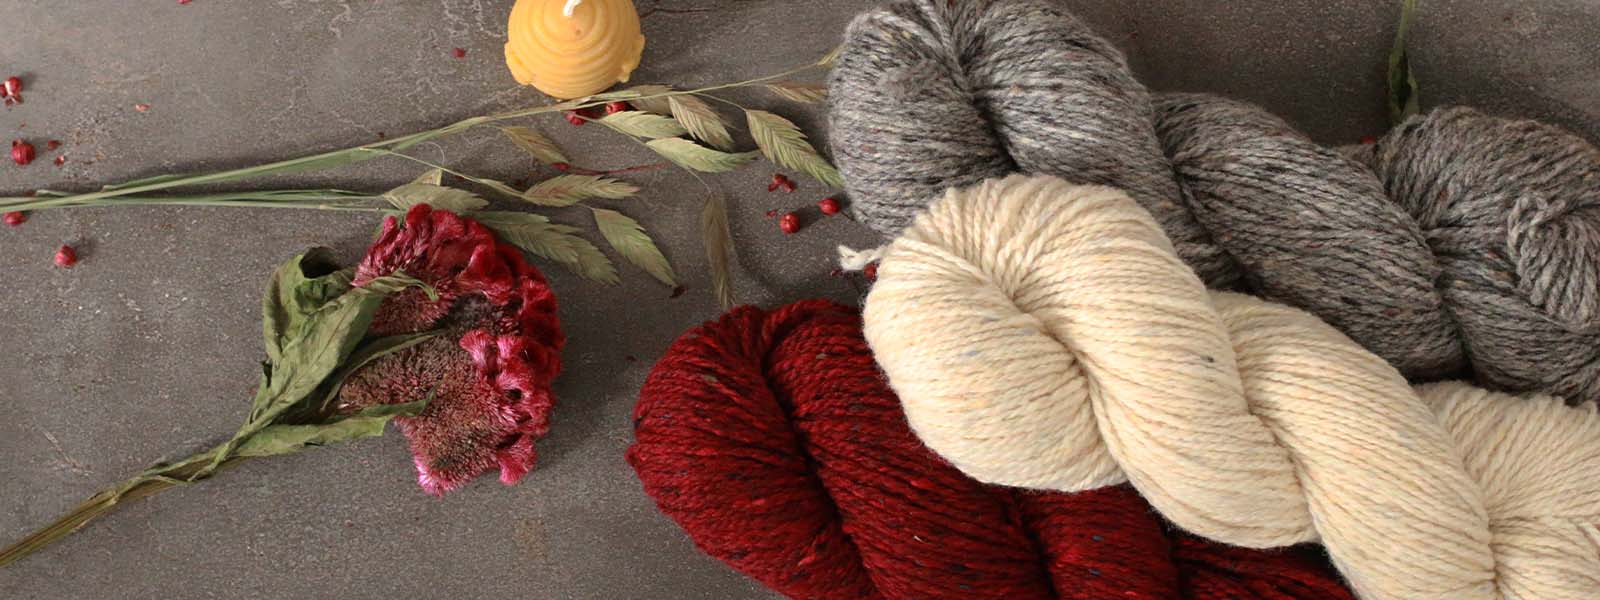 gift knitting yarn image